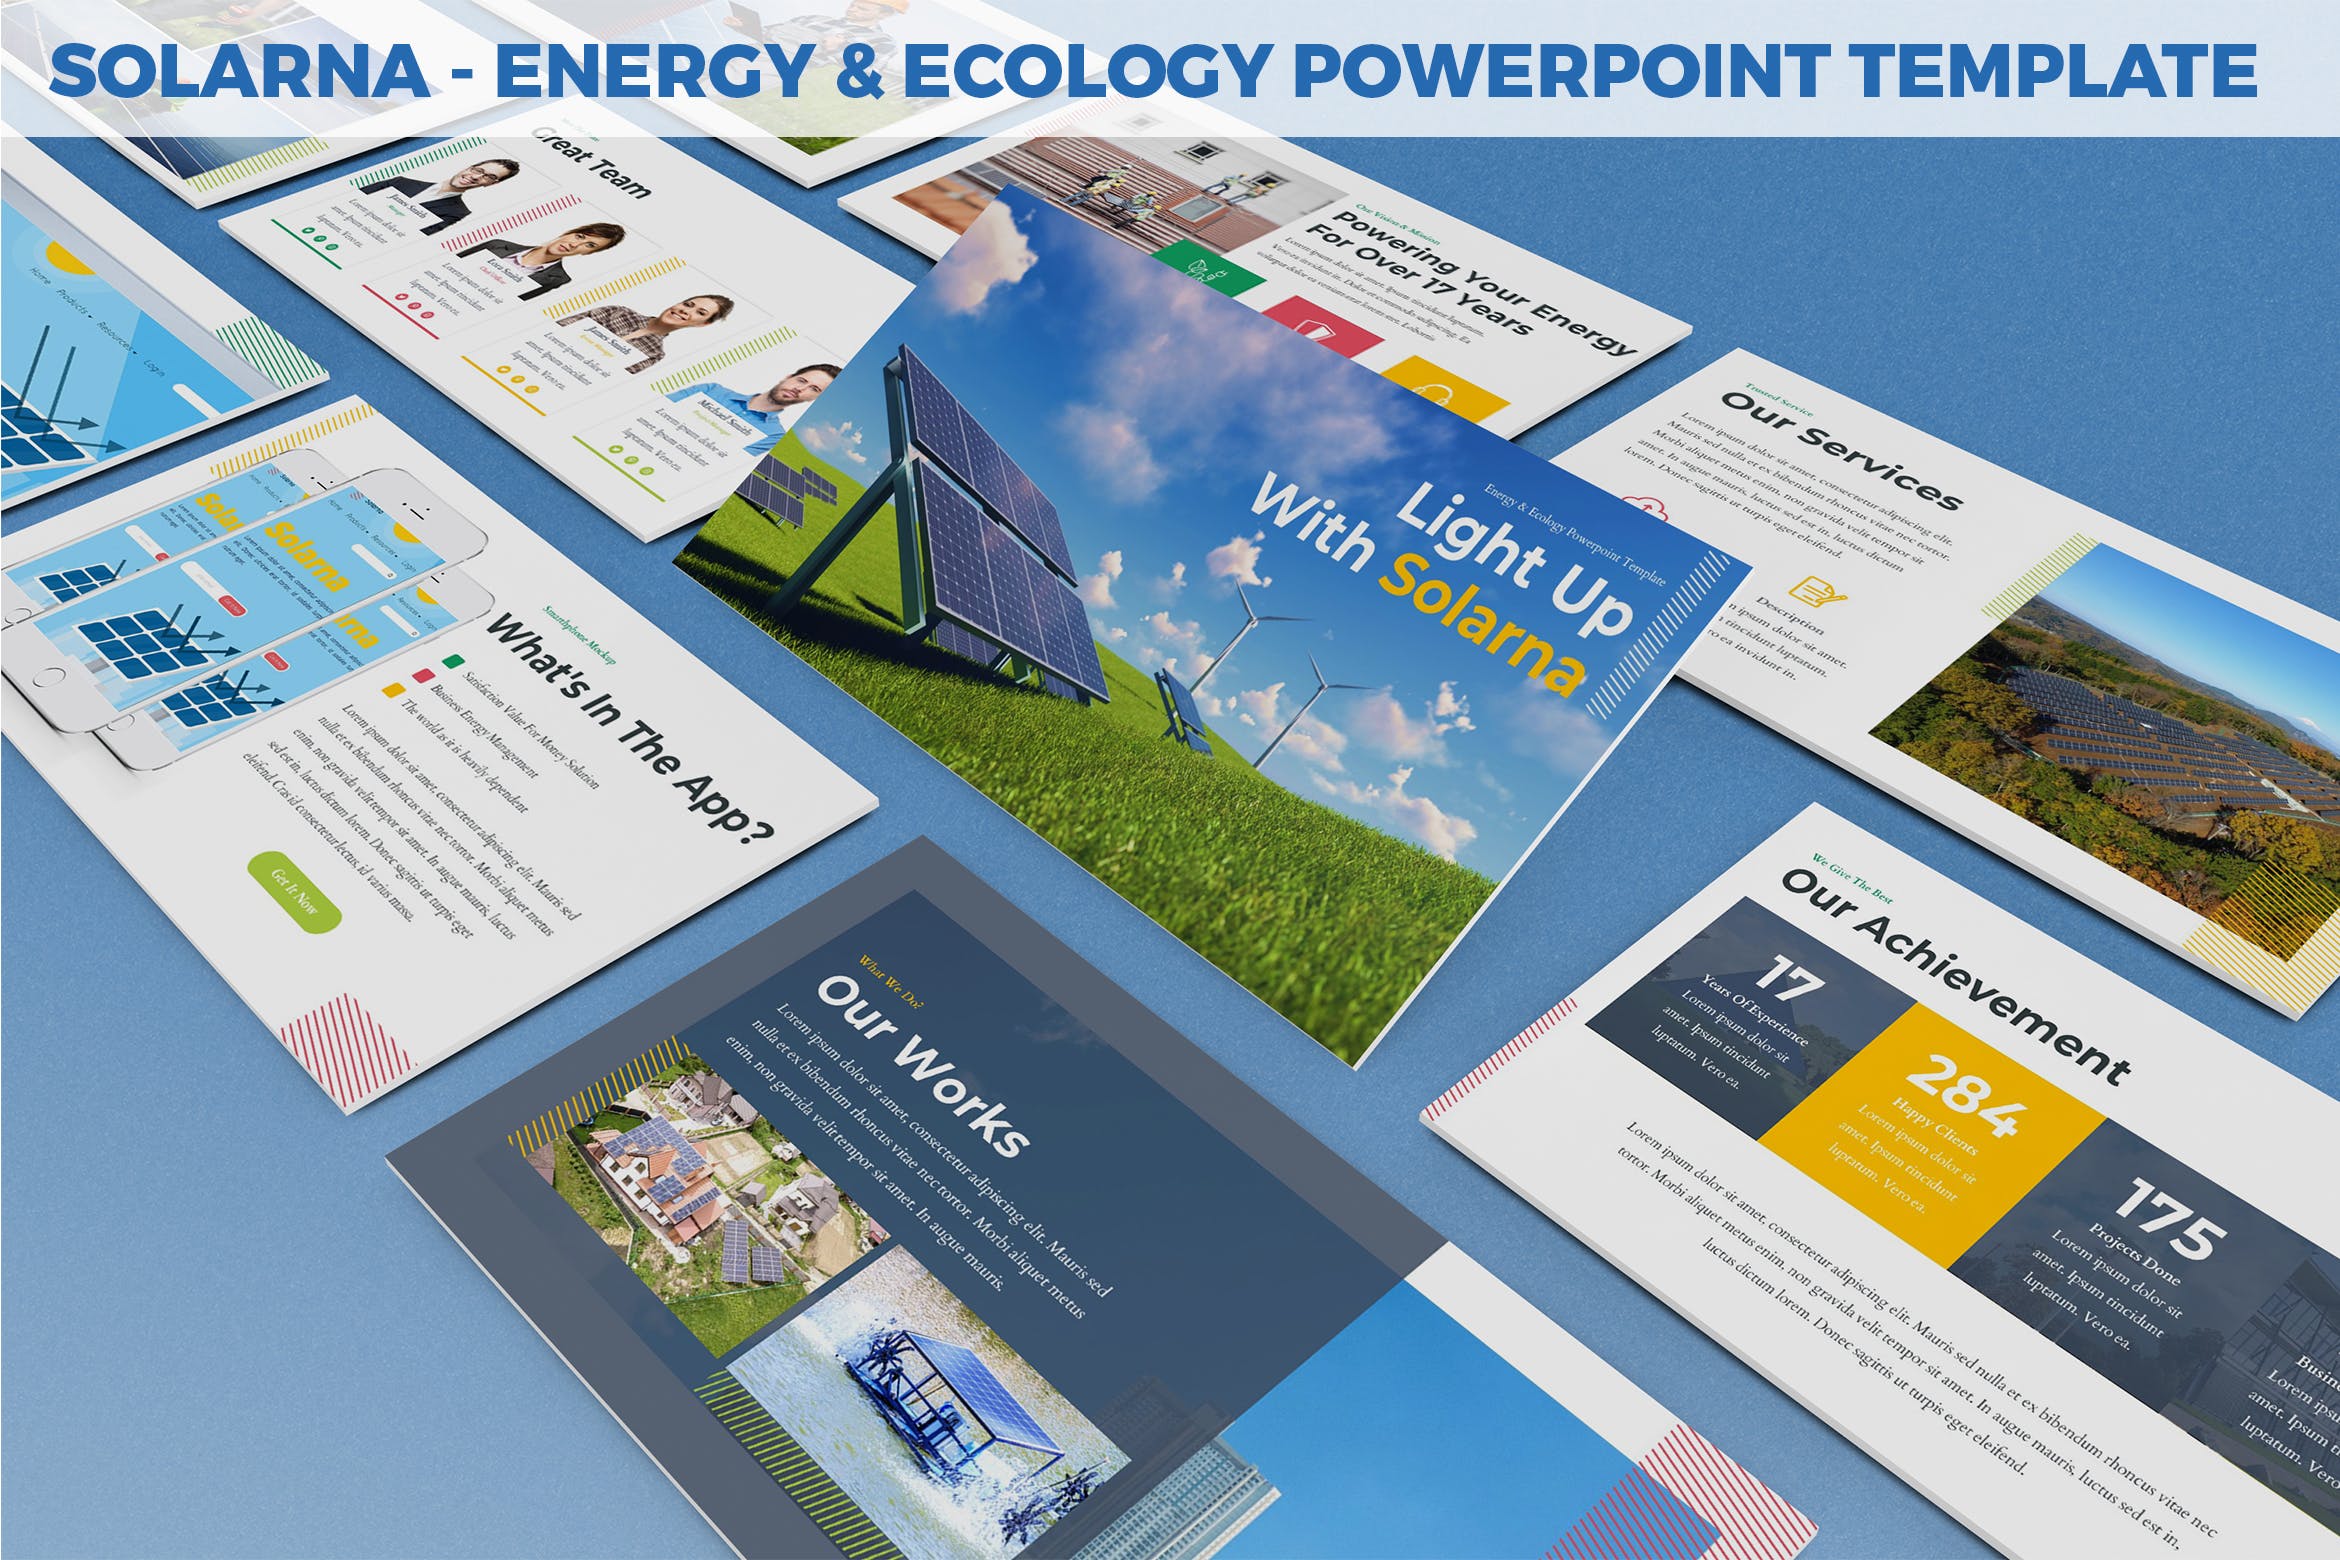 生态能源/环境主题PPT模板 Solarna – Energy & Ecology Powerpoint Template插图